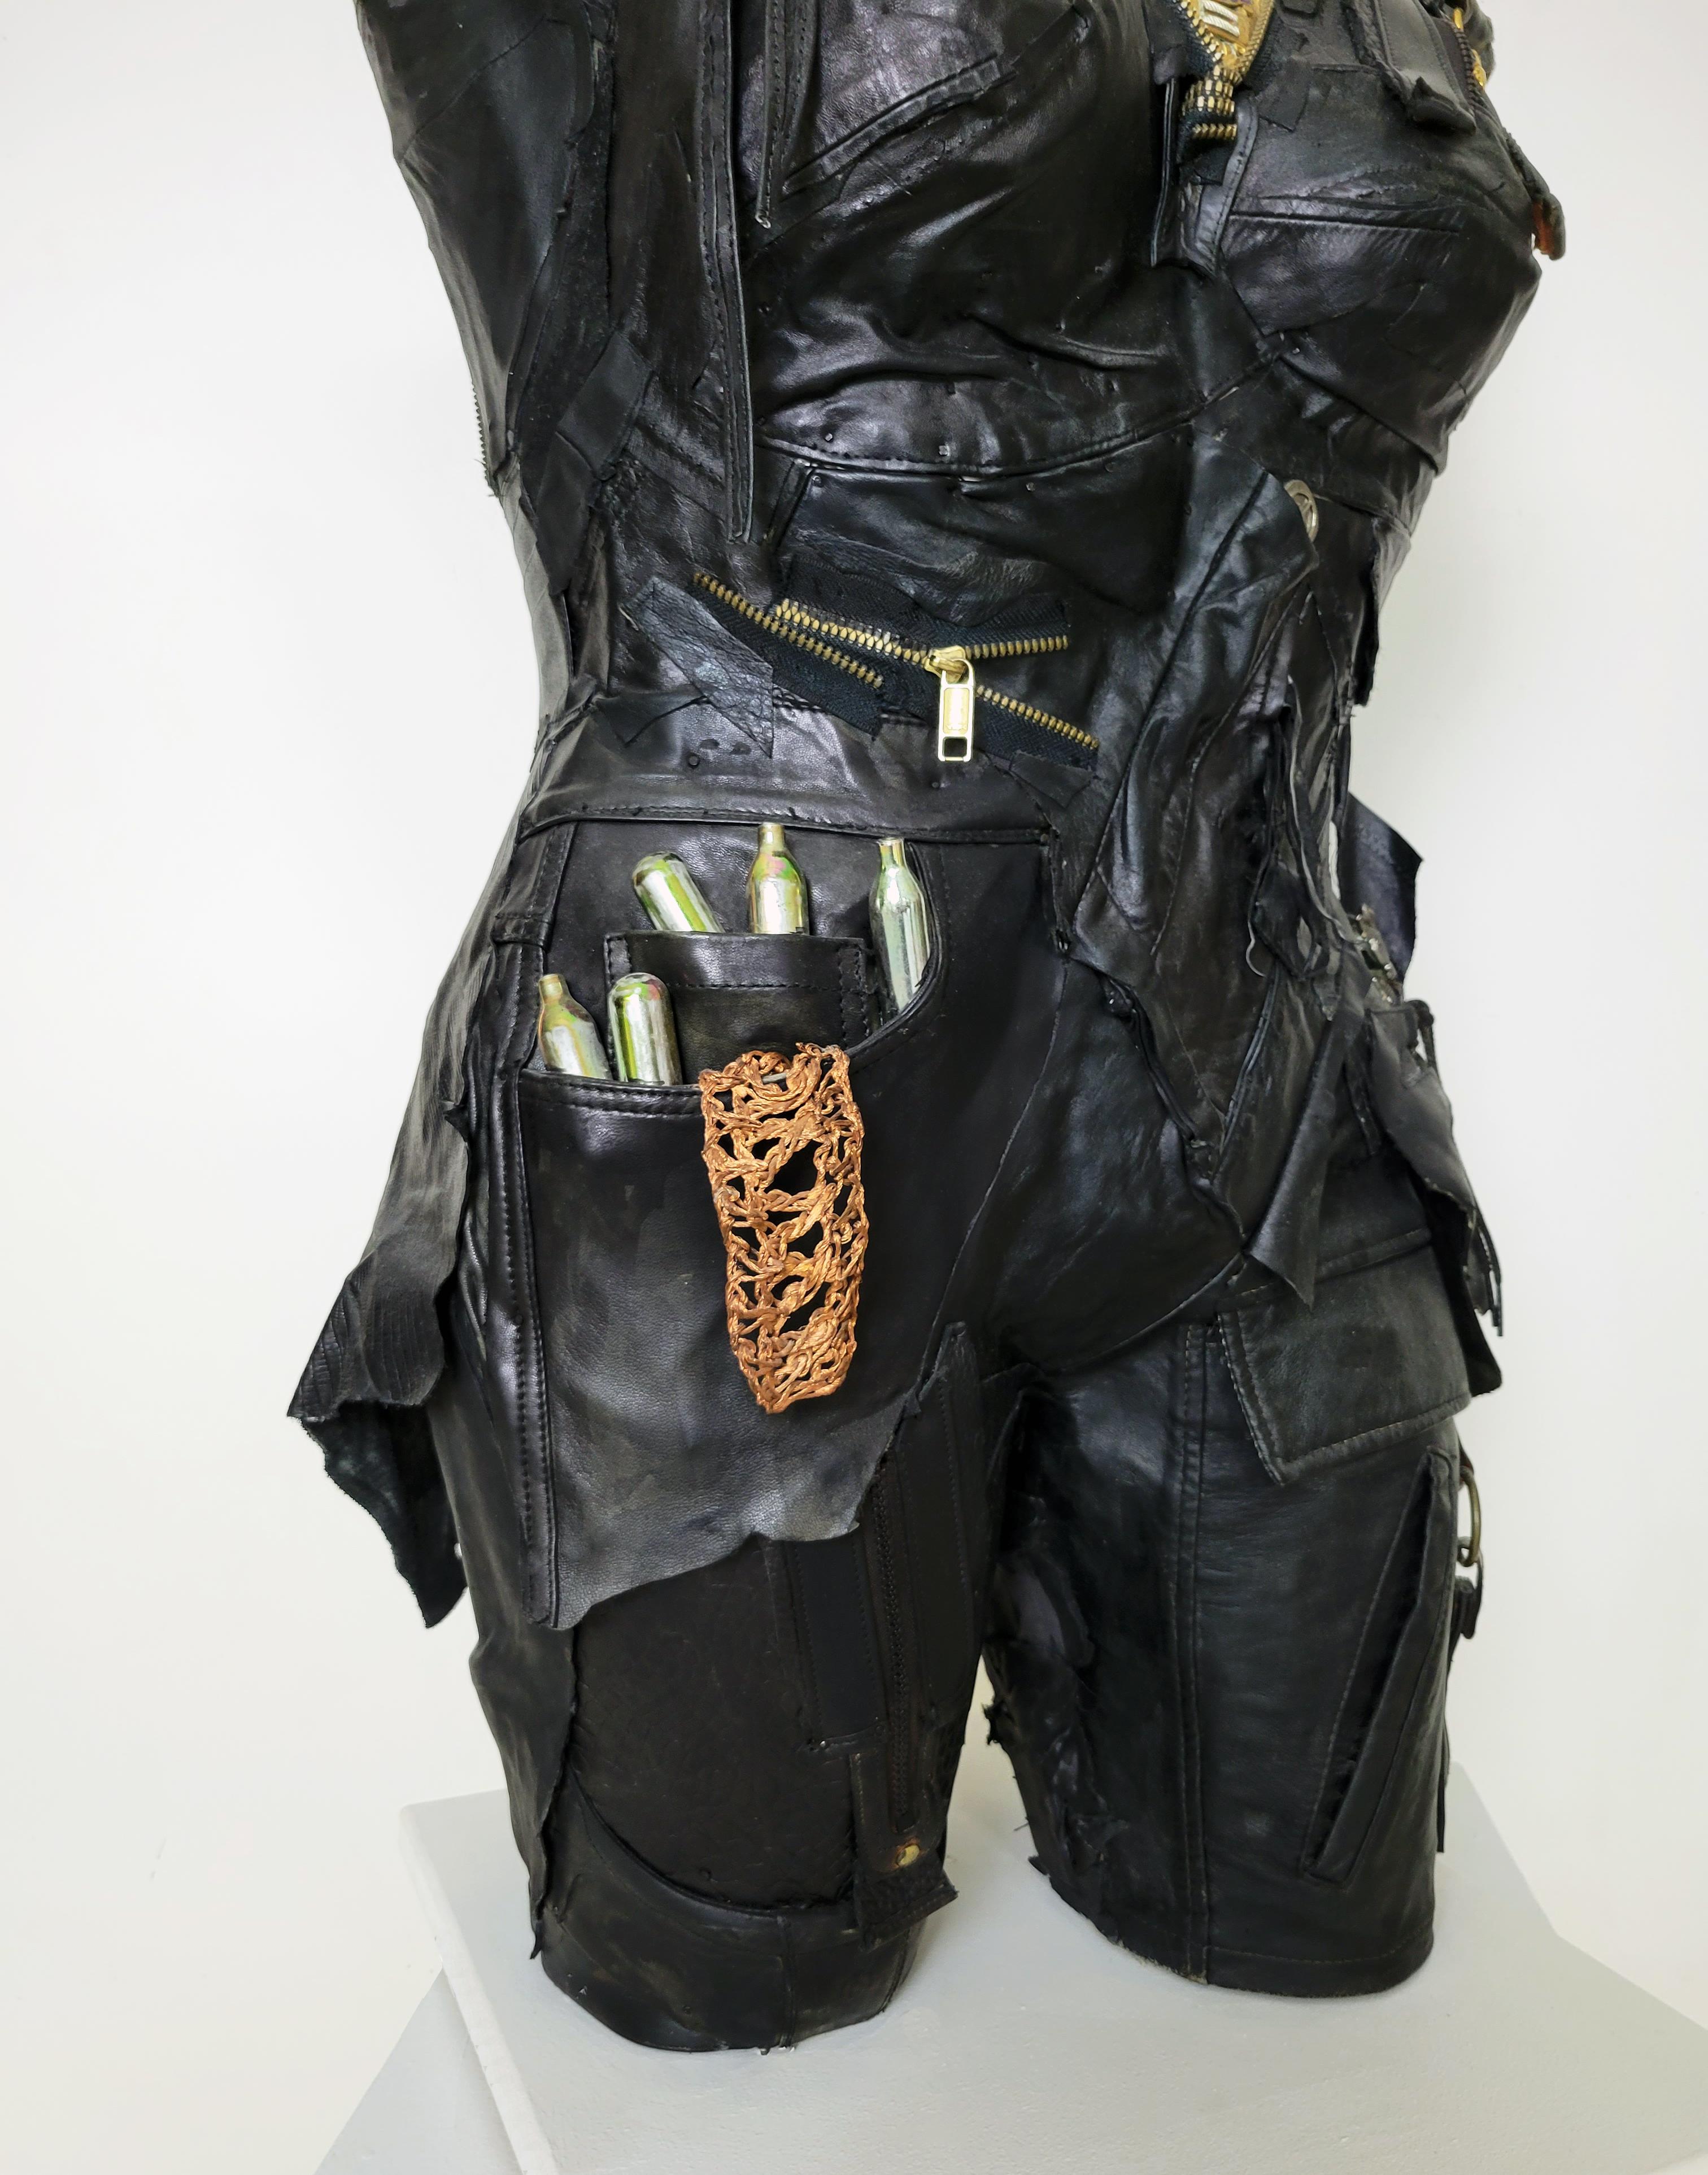 Feminist Contemporary Black/Silver Leather Metal Torso Sculpture - Captain 701 For Sale 3